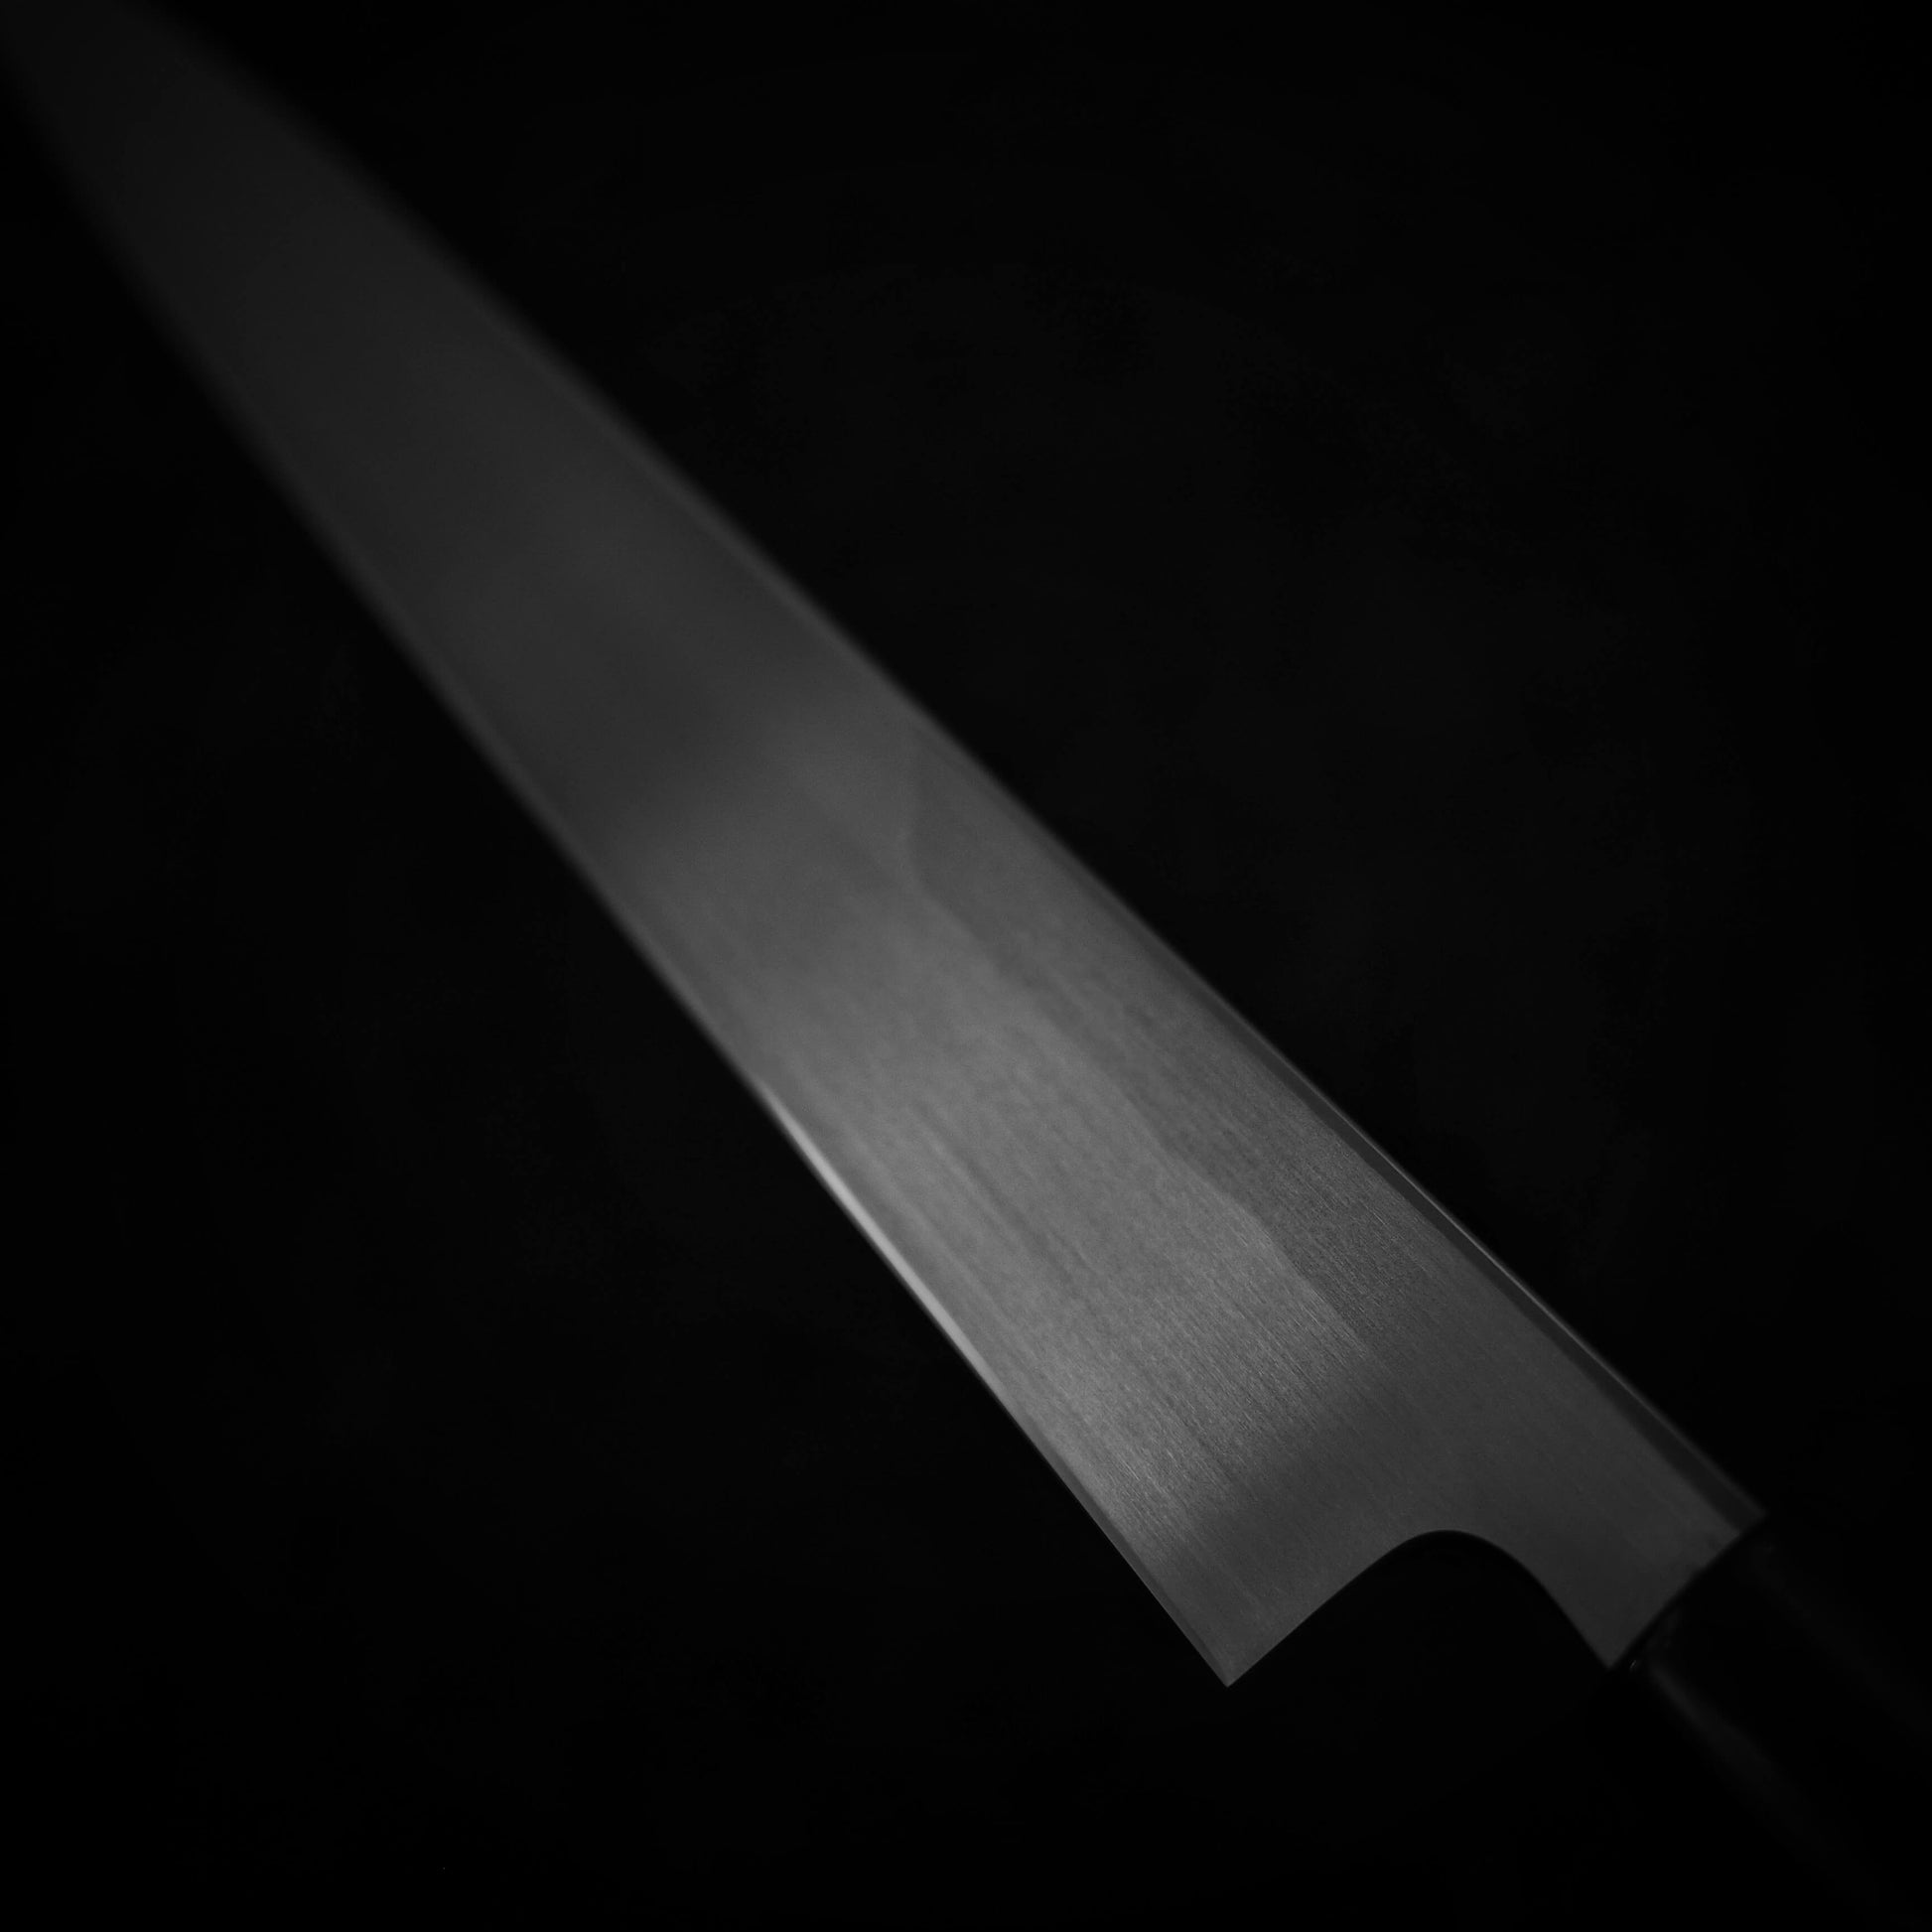 Shigefusa kasumi yanagiba 270mm - Zahocho Japanese Knives